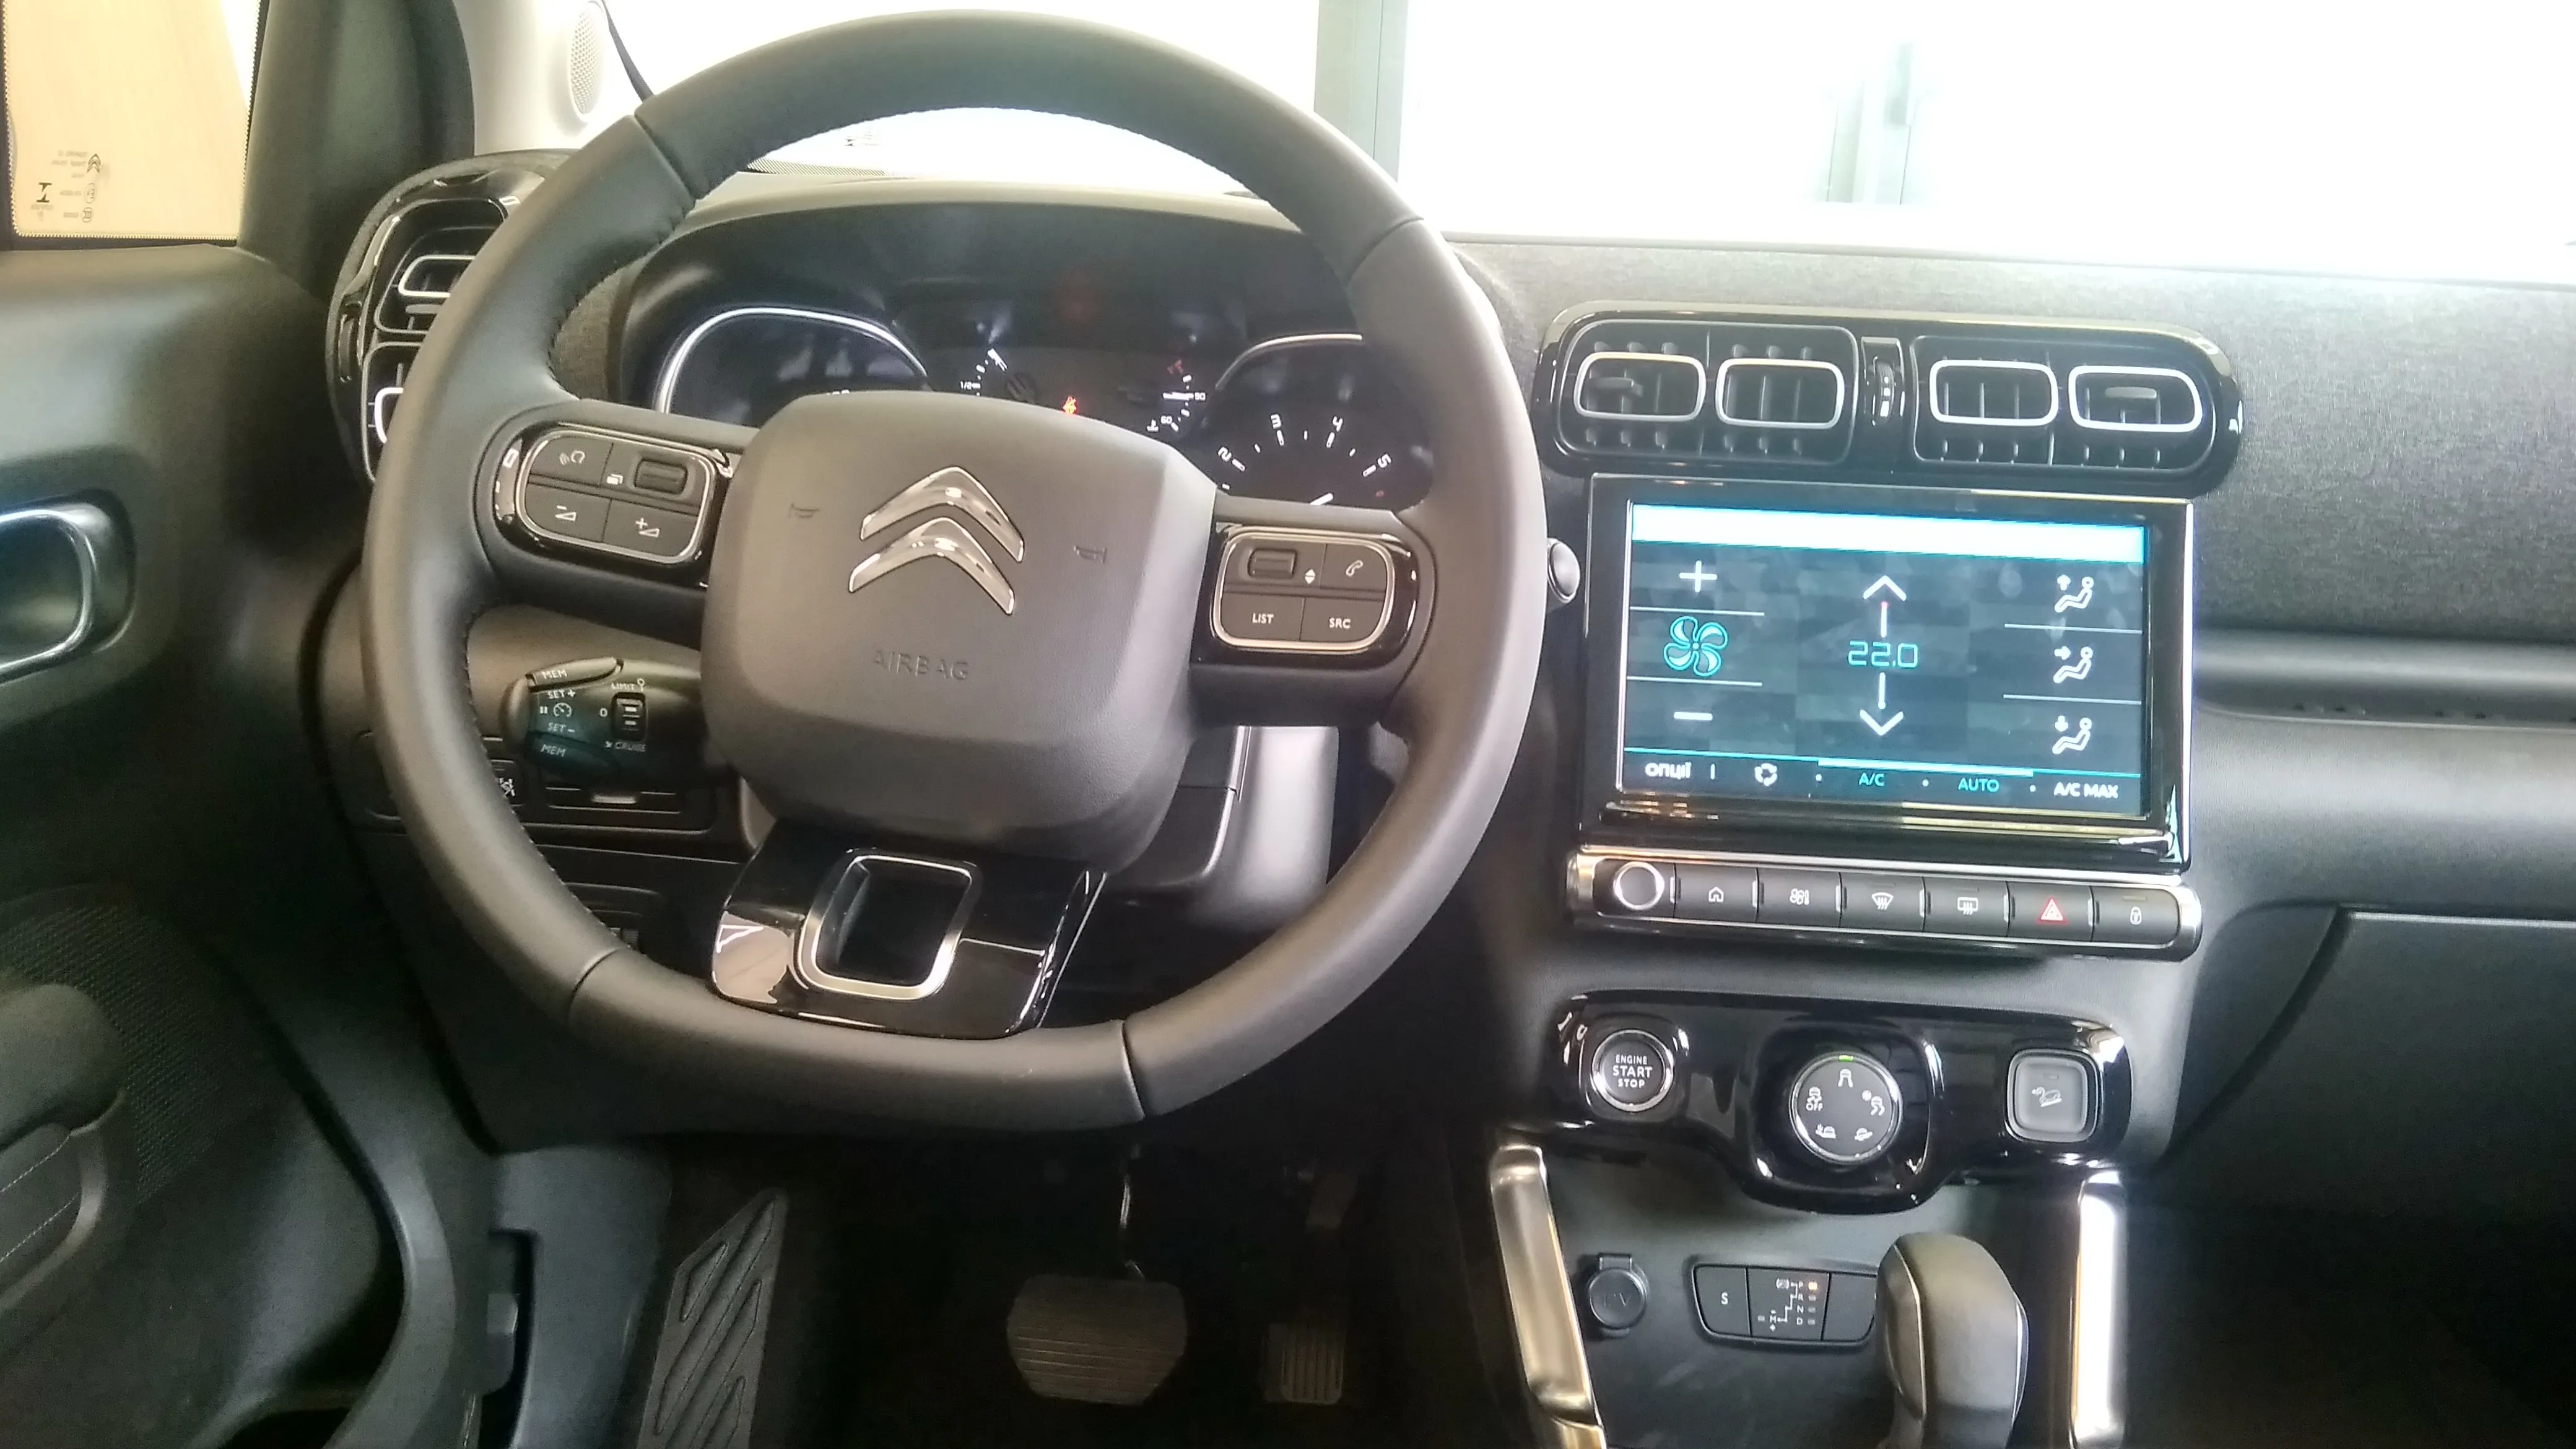 NEW С3 Aircross SHINE 1.2 PureTech Auto